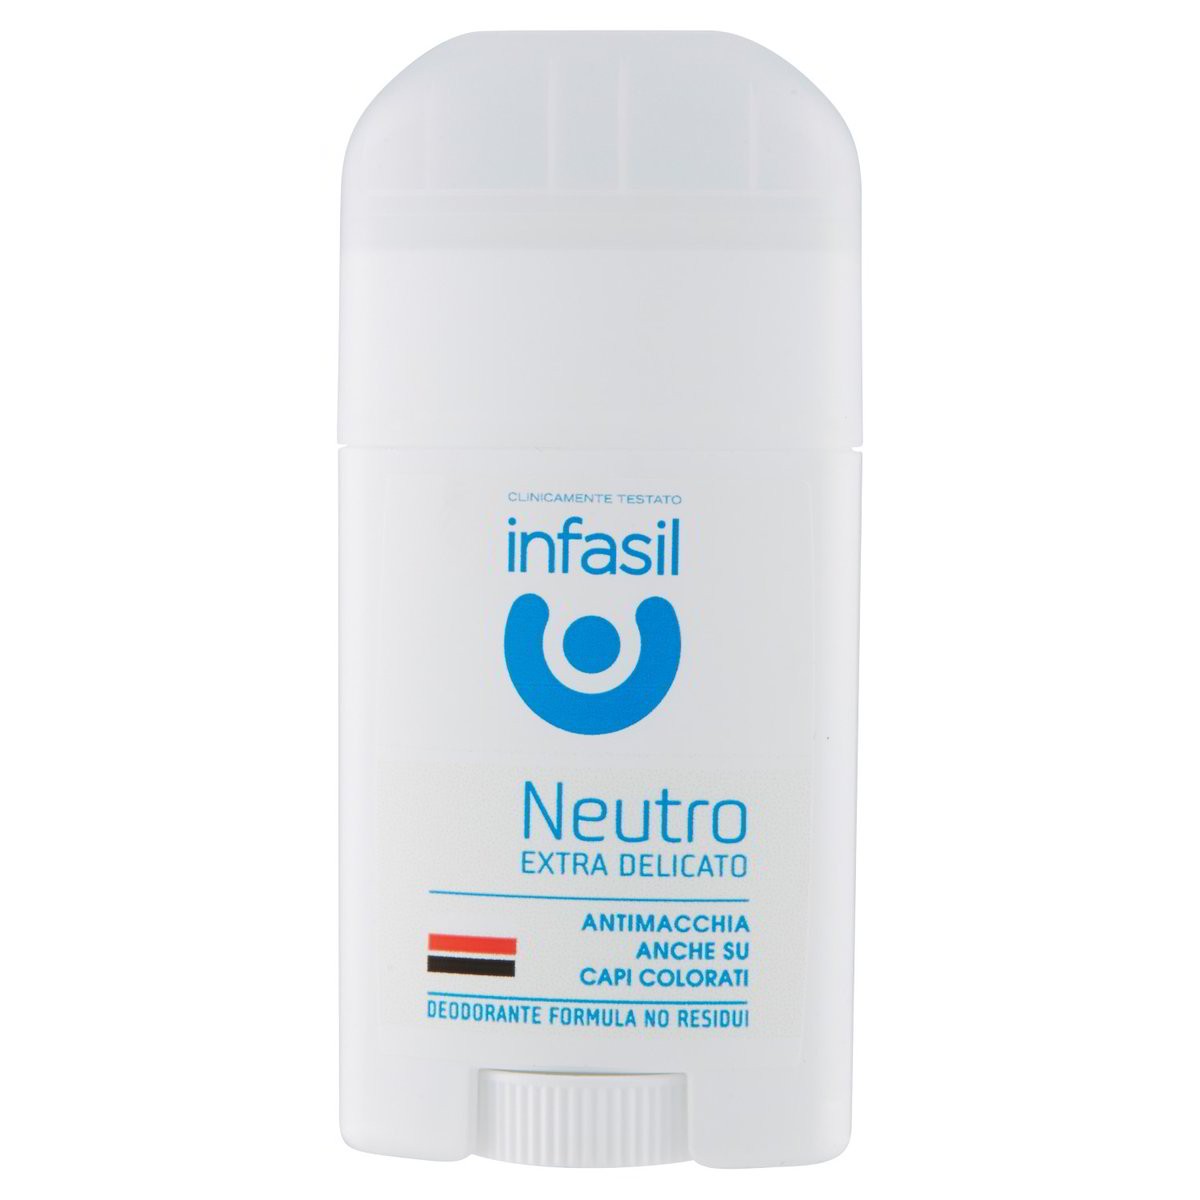 Infasil Deodorante stick Neutro